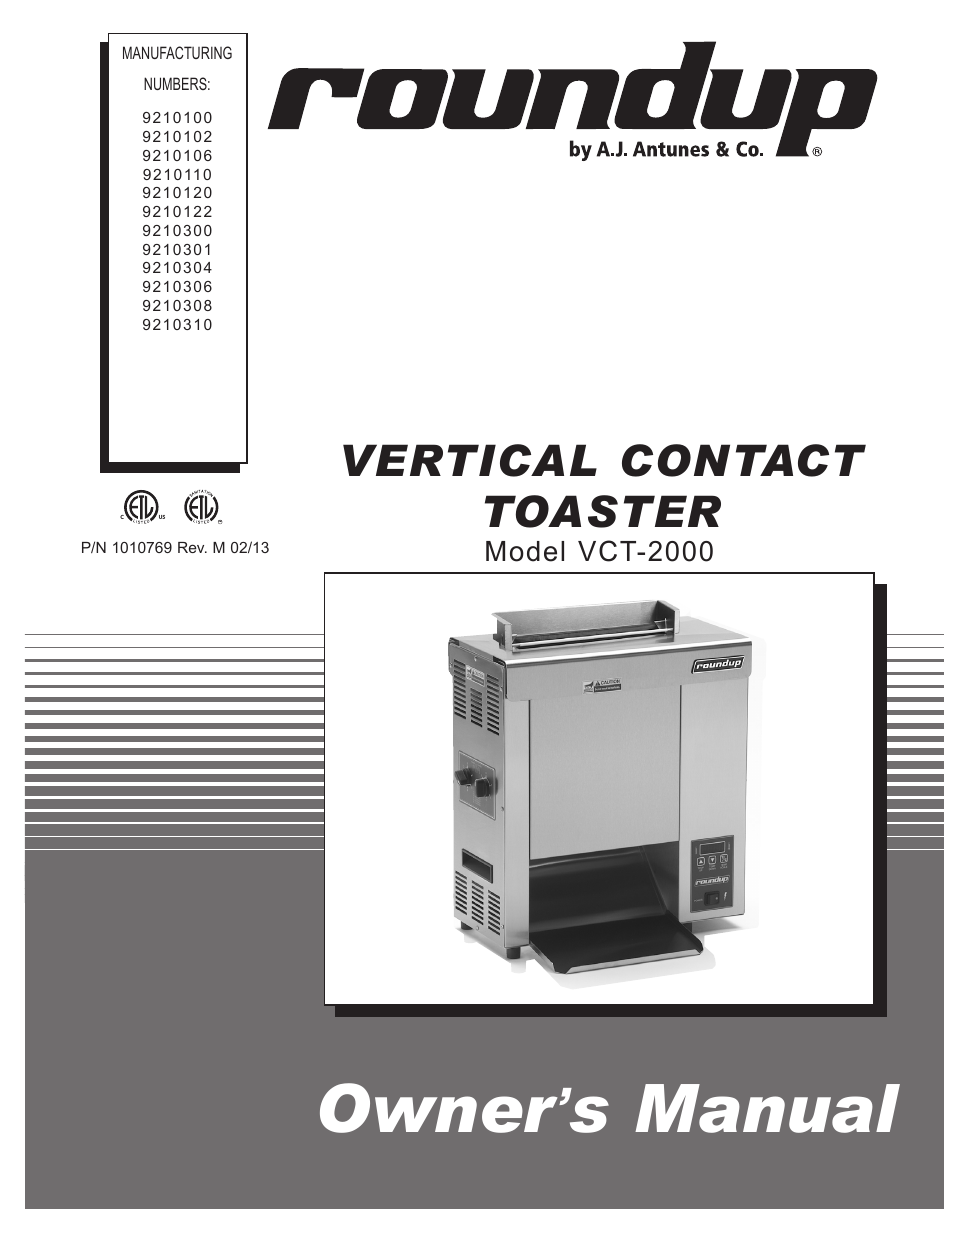 VCT-2000 9210120